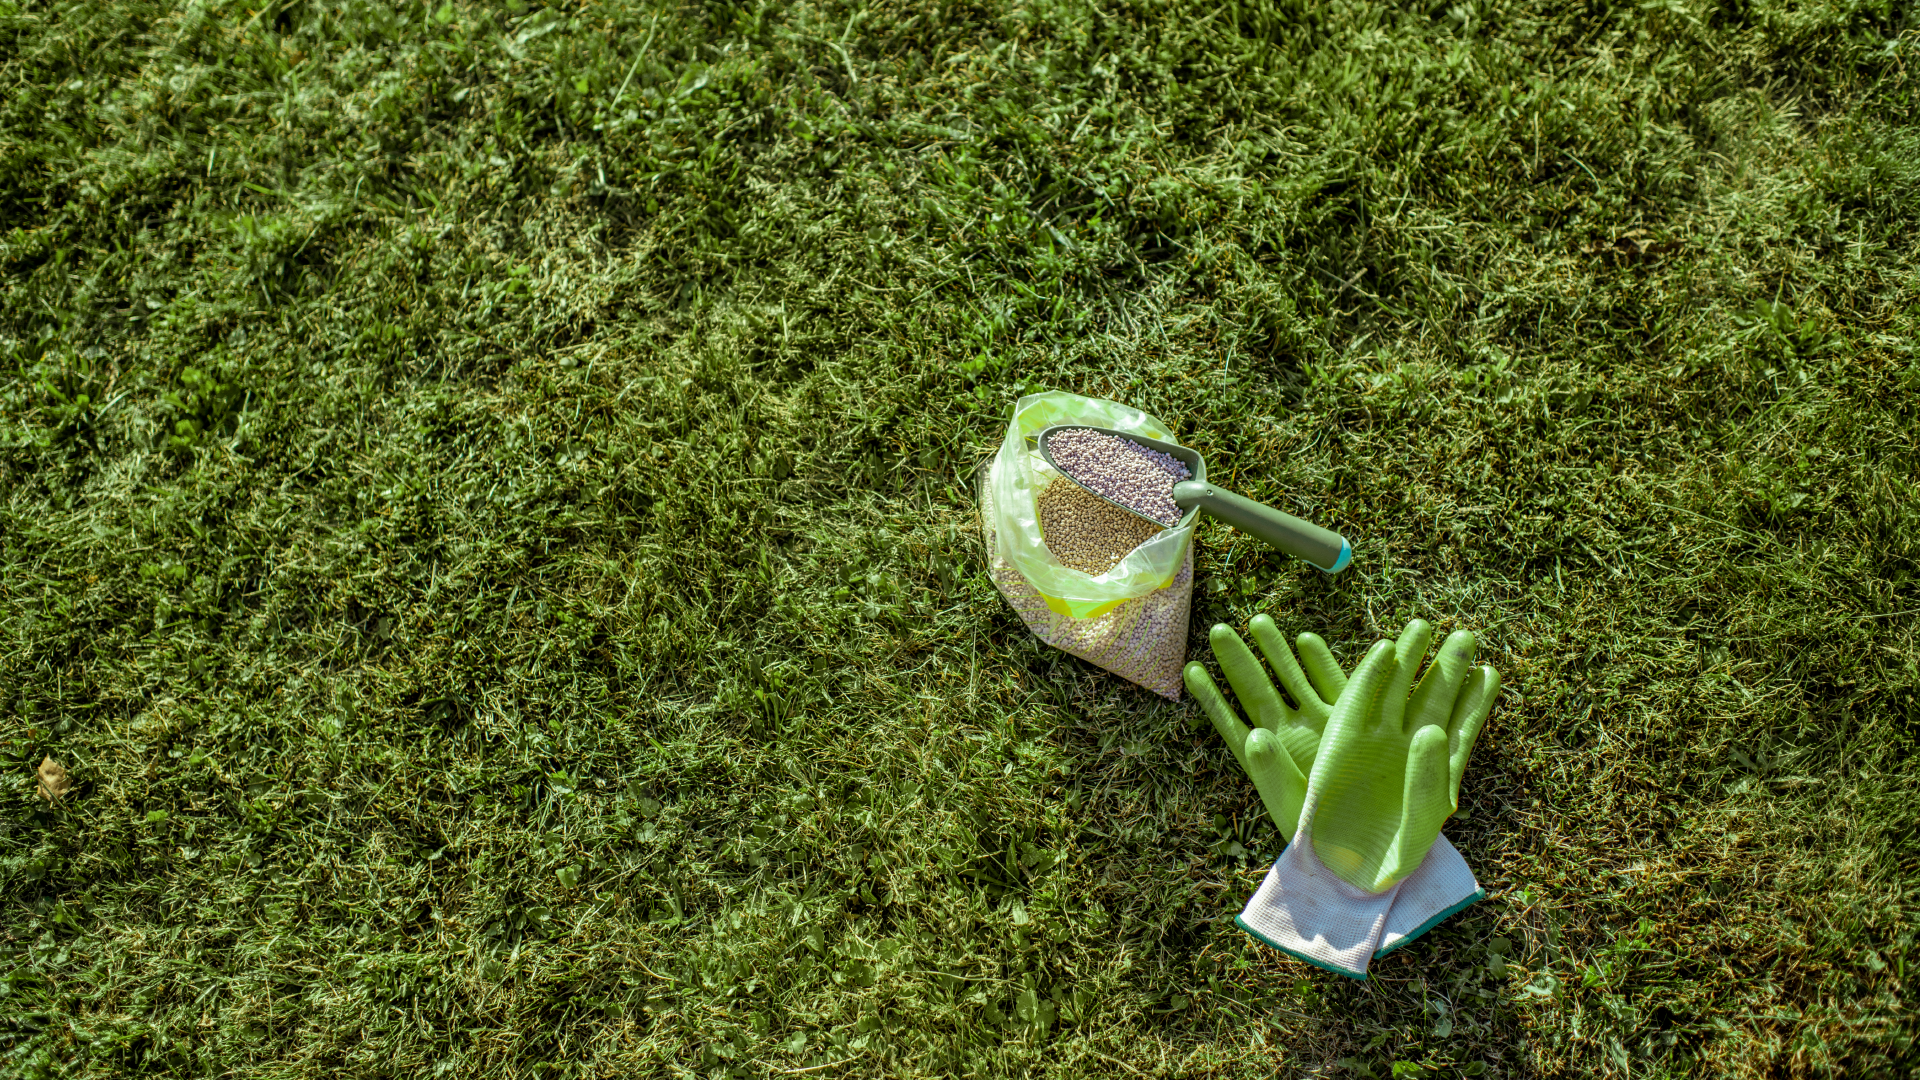 granular fertilizer bag and gardening gloves on green grass